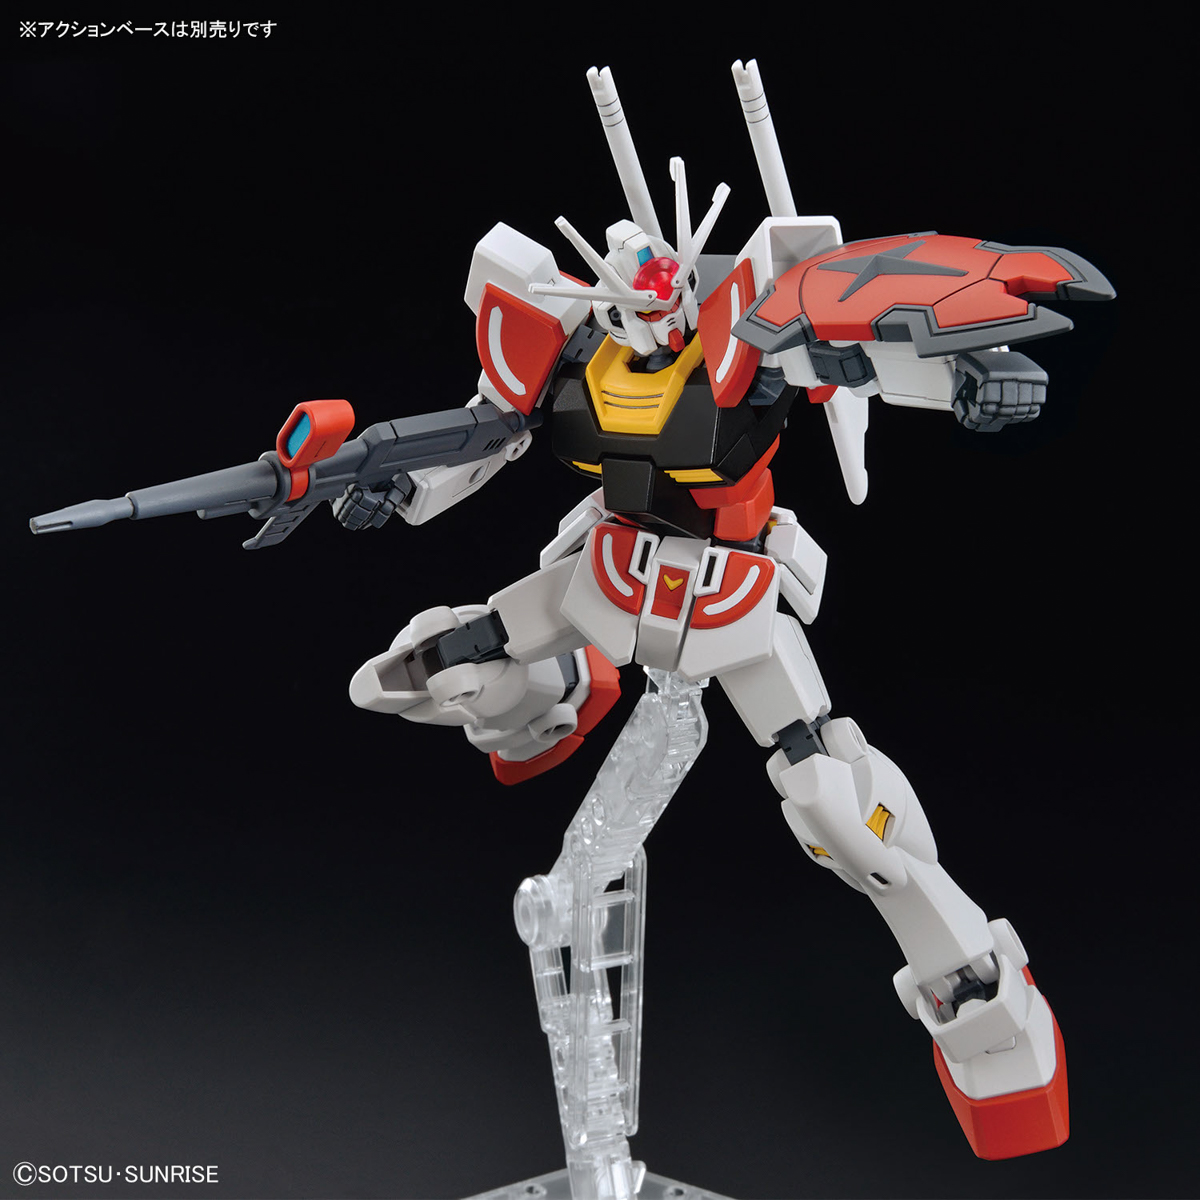 1/144 GRADE D'ENTRÉE Ra Gundam (Gundam Build Metaverse)